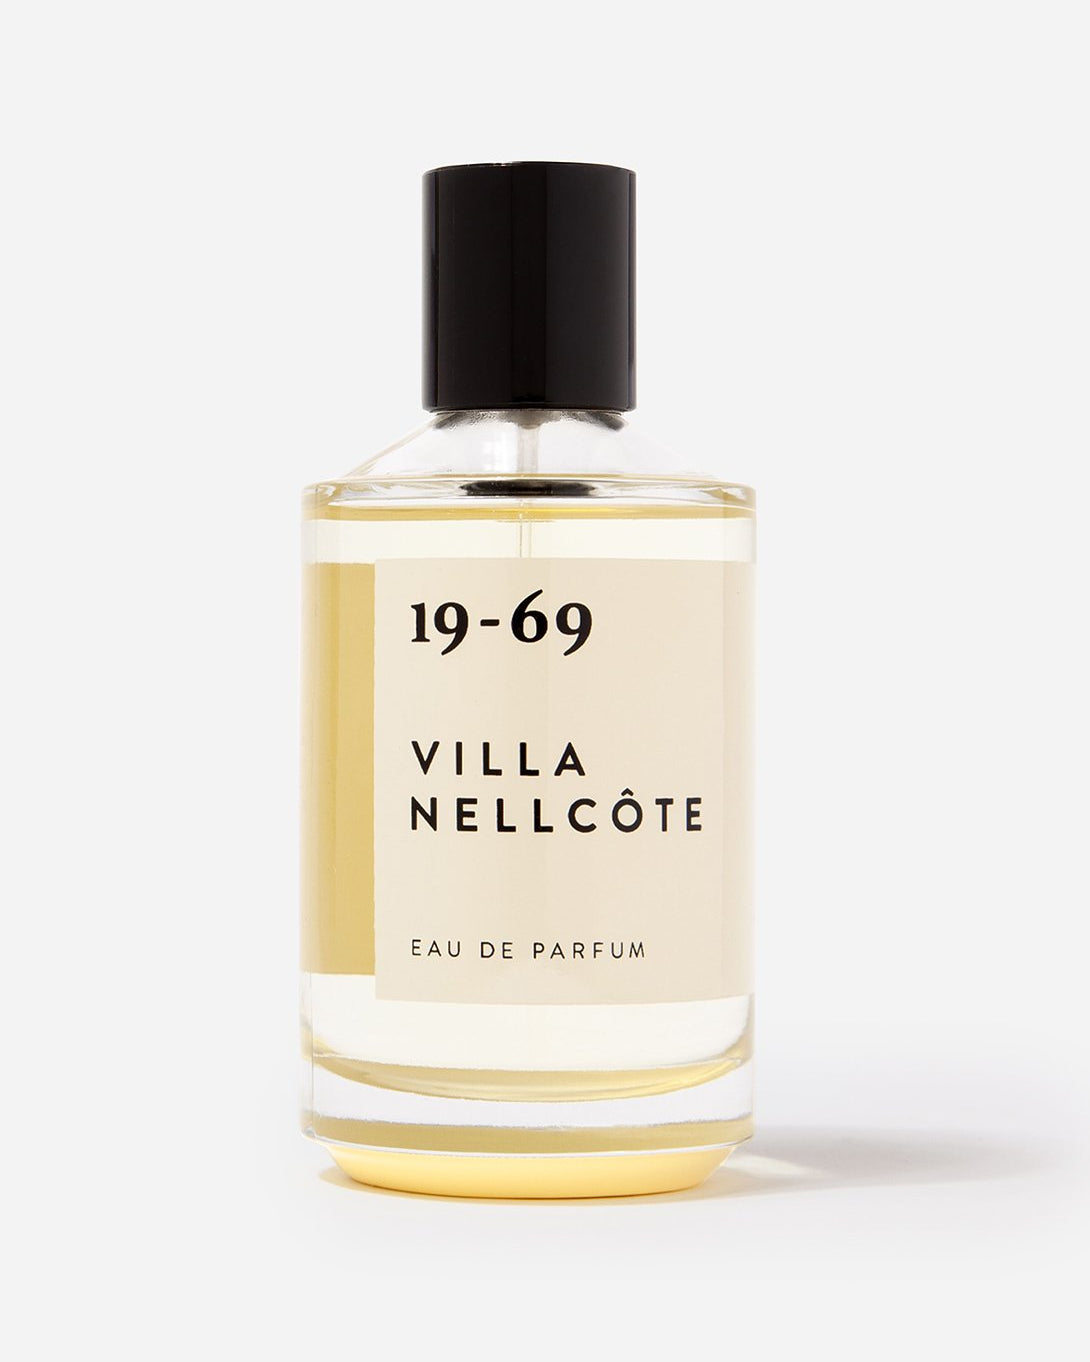 VILLA NELLCOTE perfume for men and women unisex villa nellcote 100ml 19-69